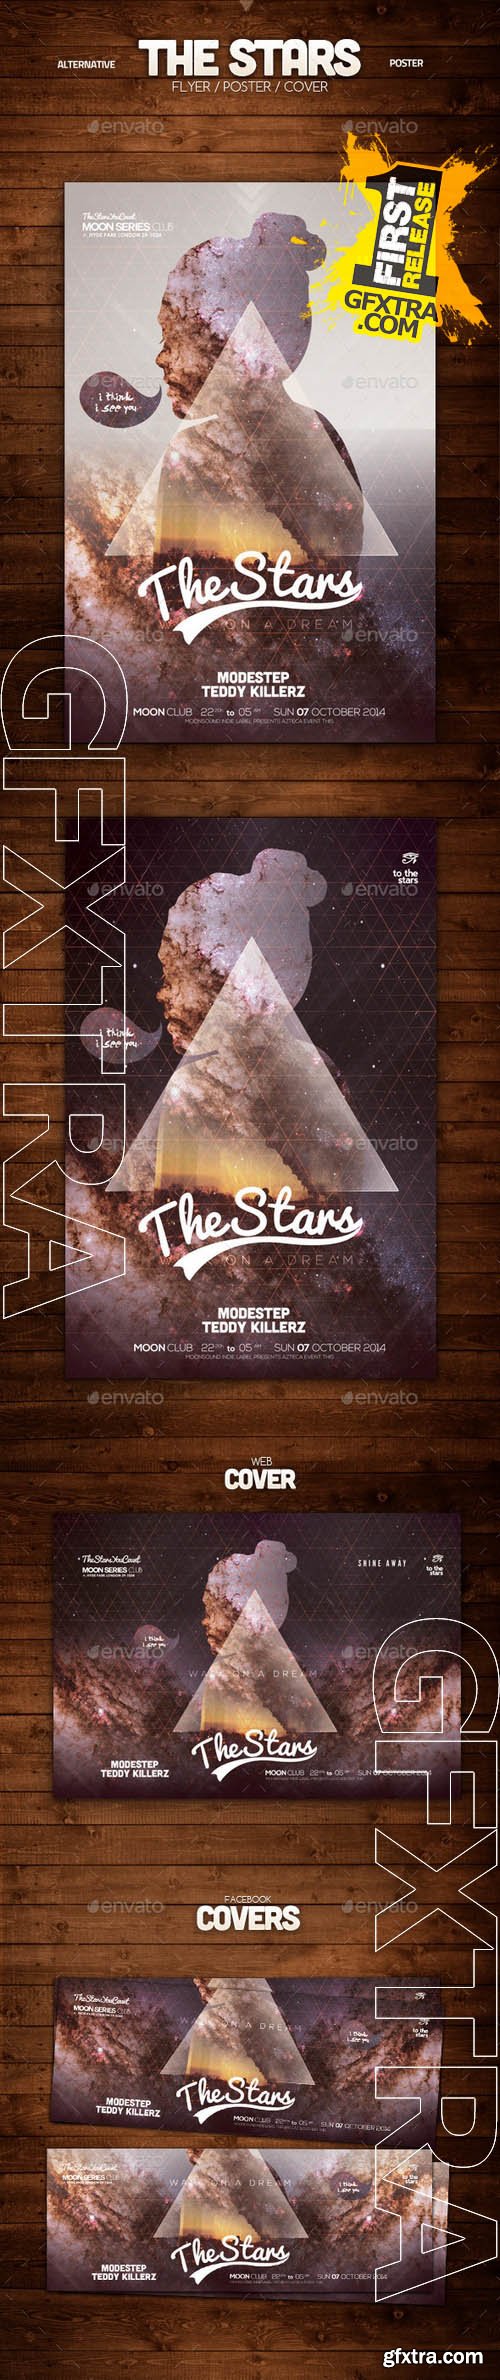 The Stars Alternative Poster - Graphicriver 9199078